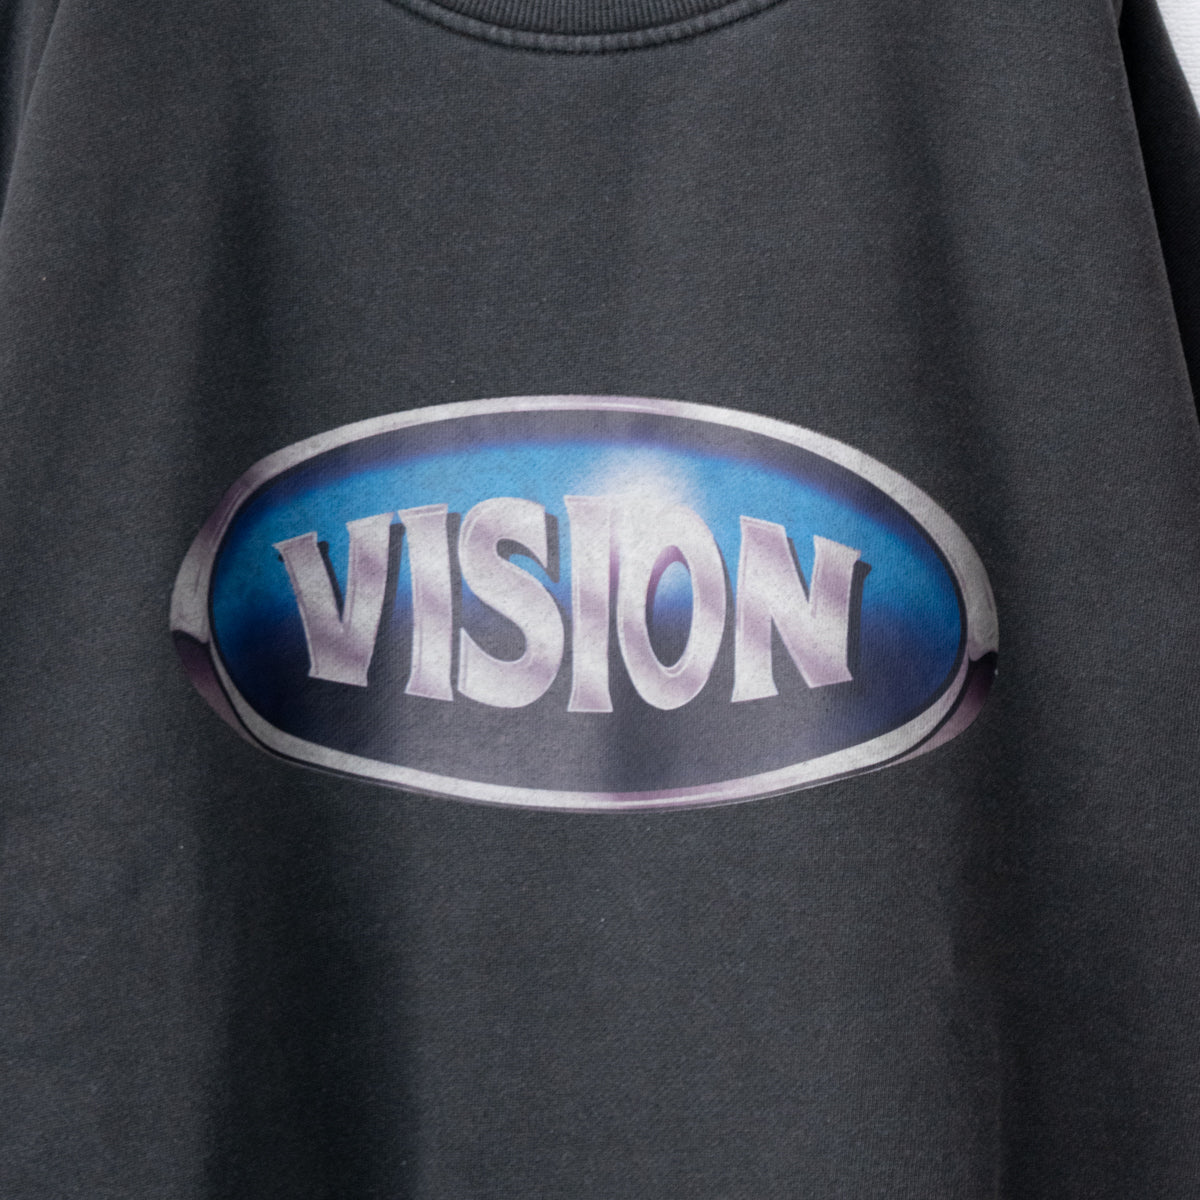 VISION STREET WEAR Pigment Metal Circle Sweatshirt, CHARCOAL